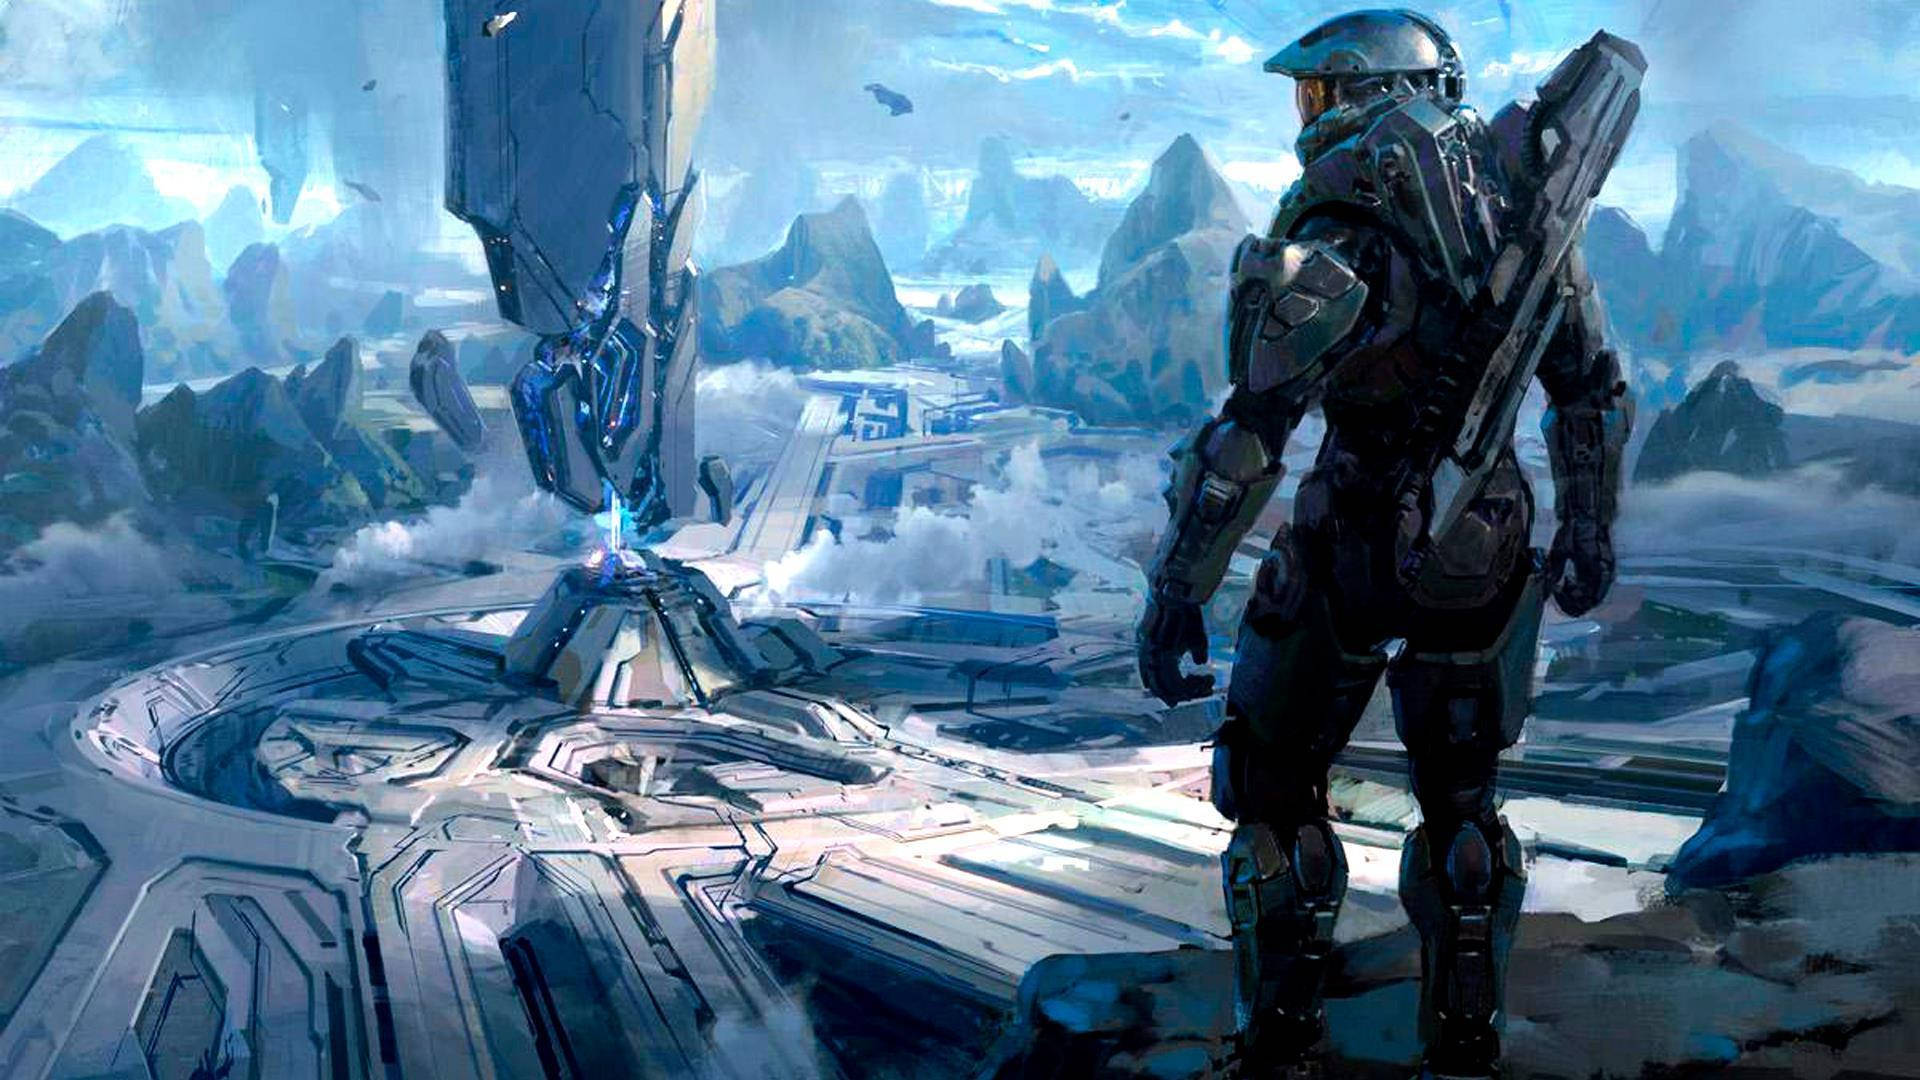 Halo 4 Futuristic City Background